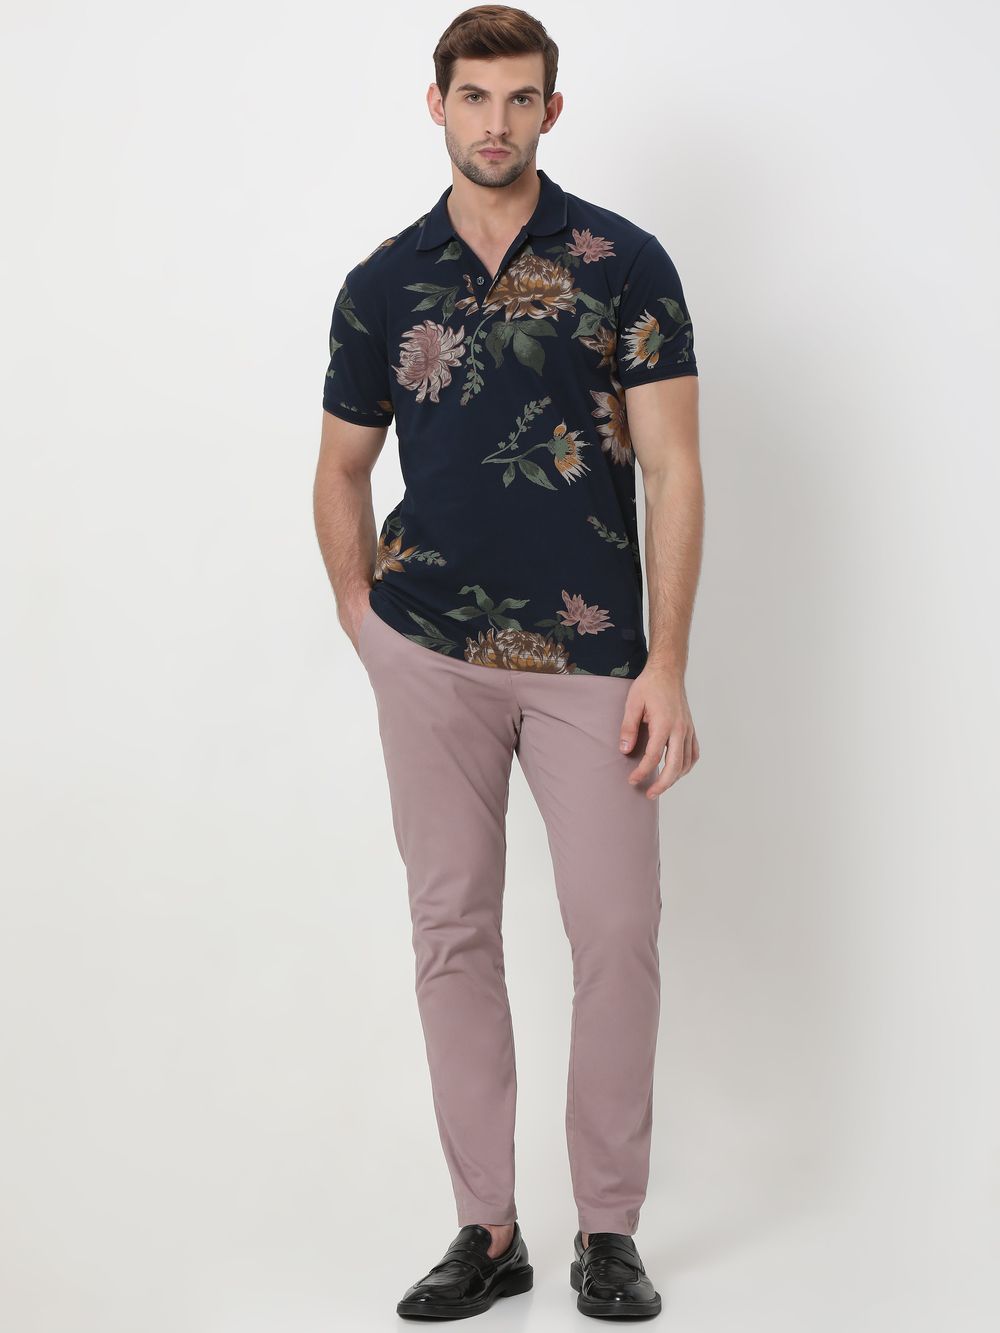 Navy & Multi Floral Print Pique Polo T-Shirt